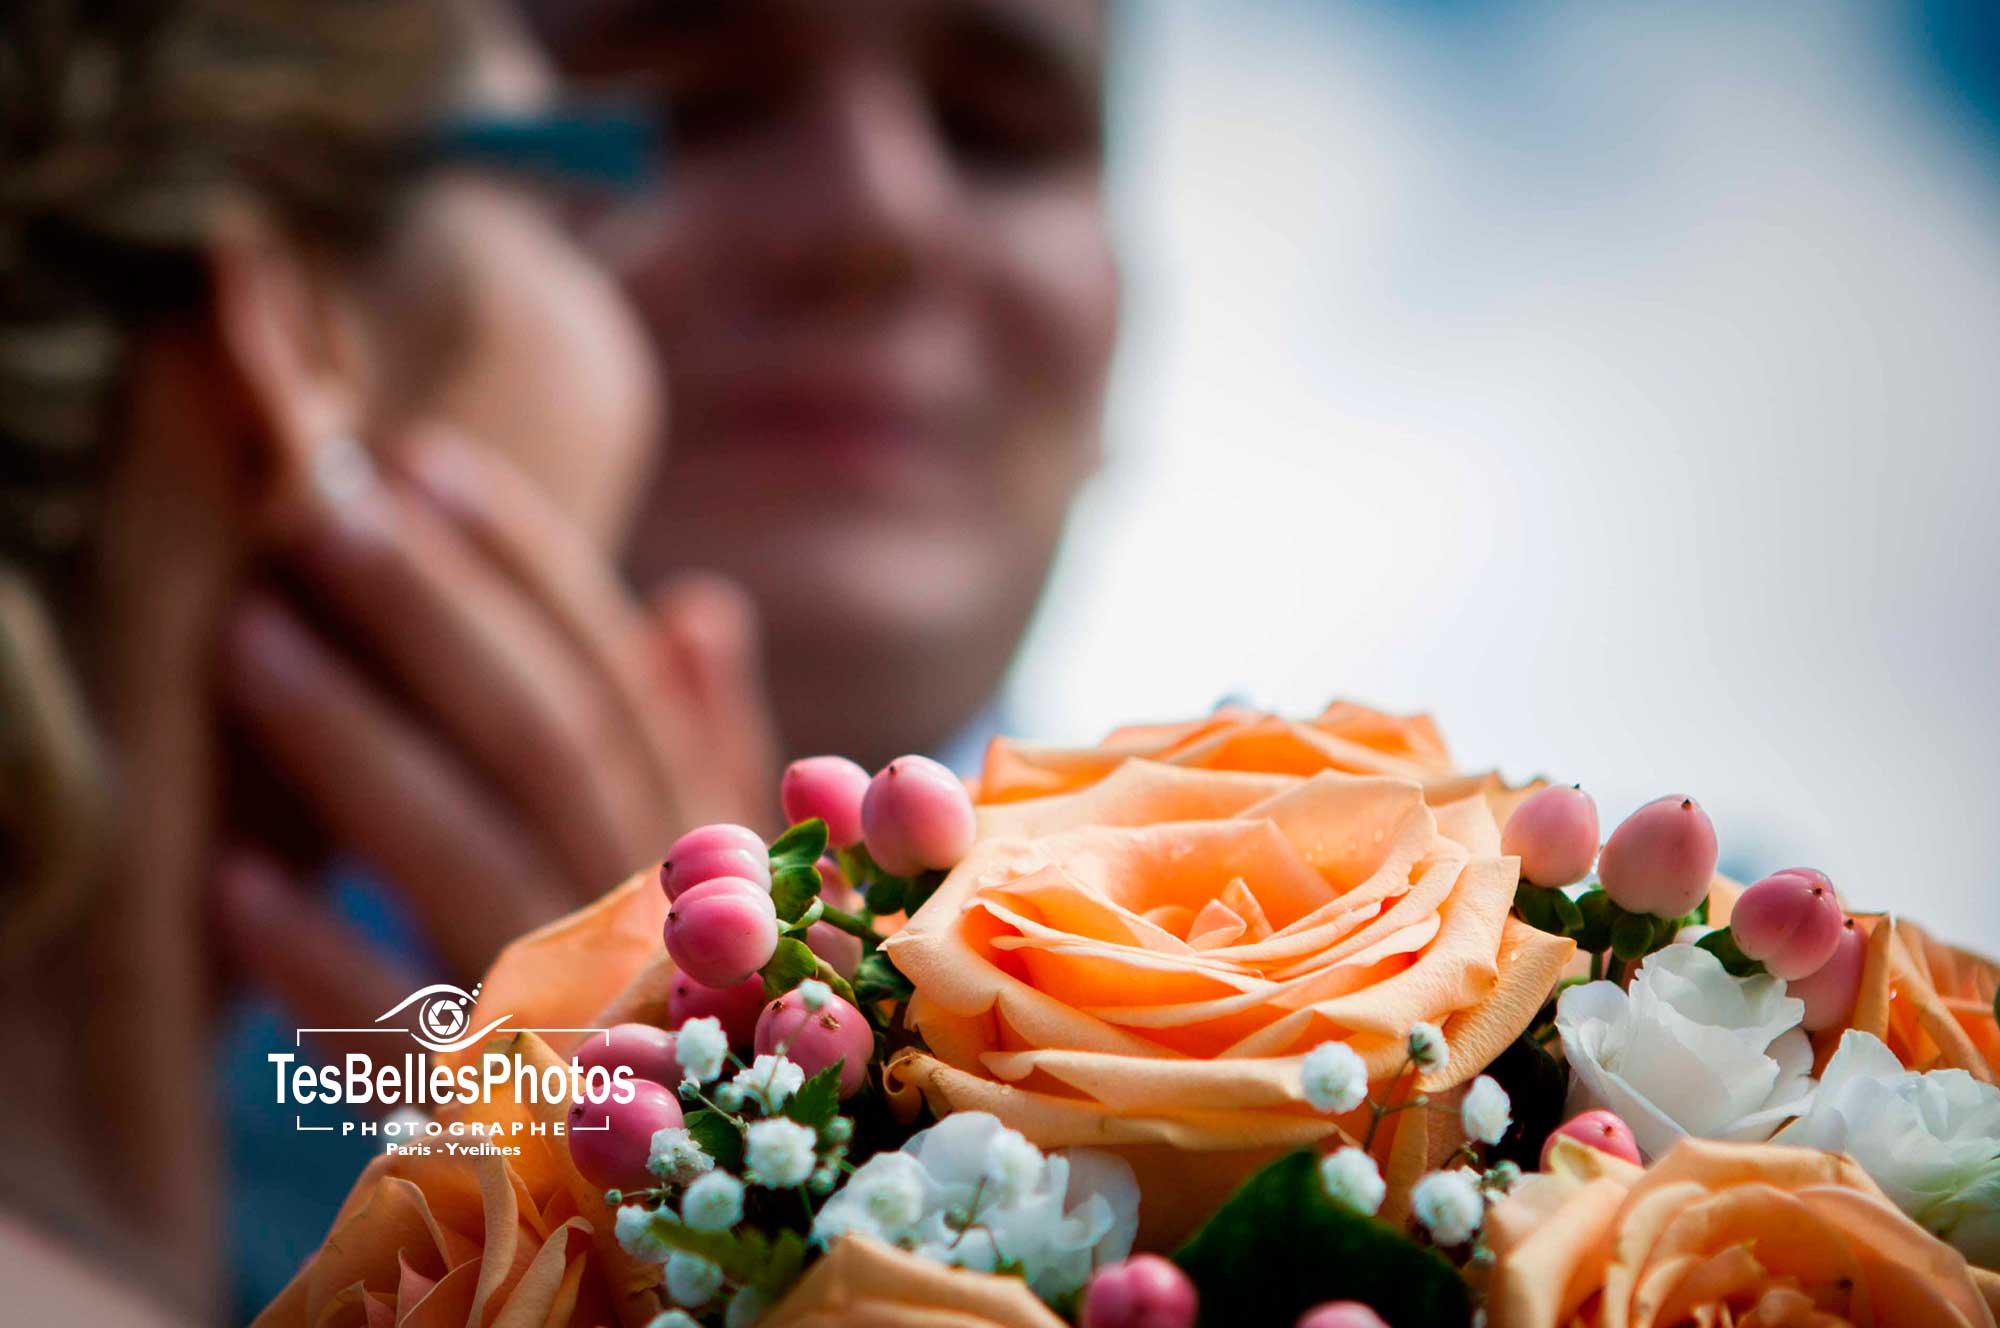 Photographe mariage Alpes-Maritimes, reportage photo de mariage dans les Alpes-Maritimes